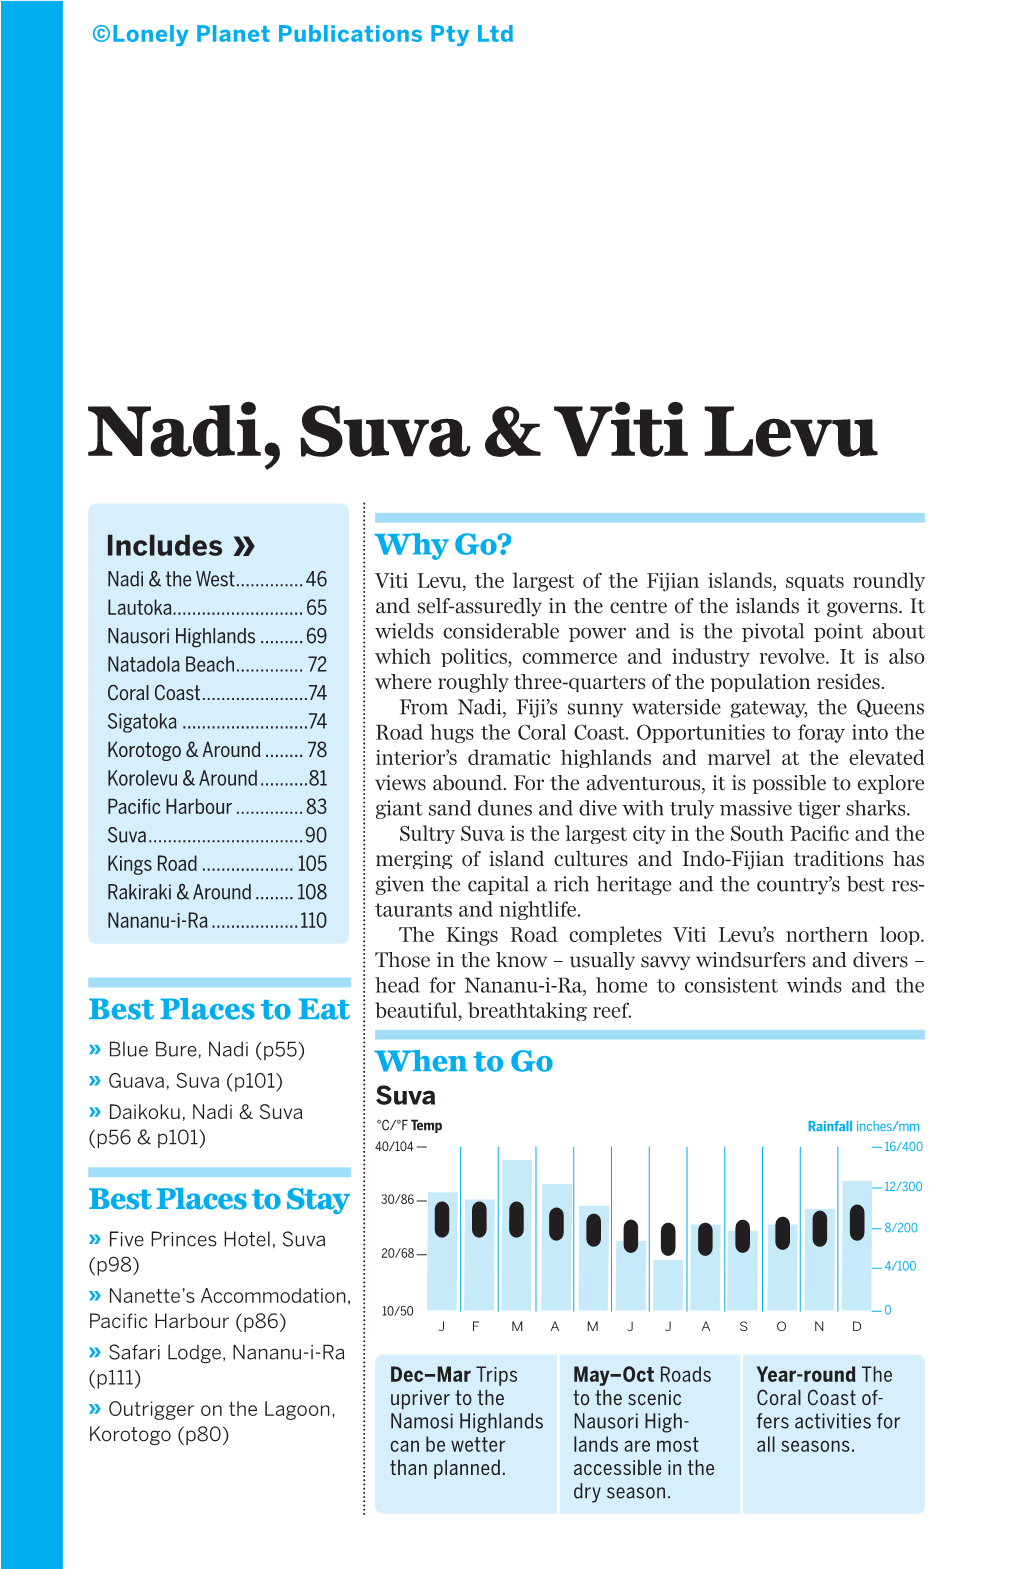 Nadi, Suva & Viti Levu